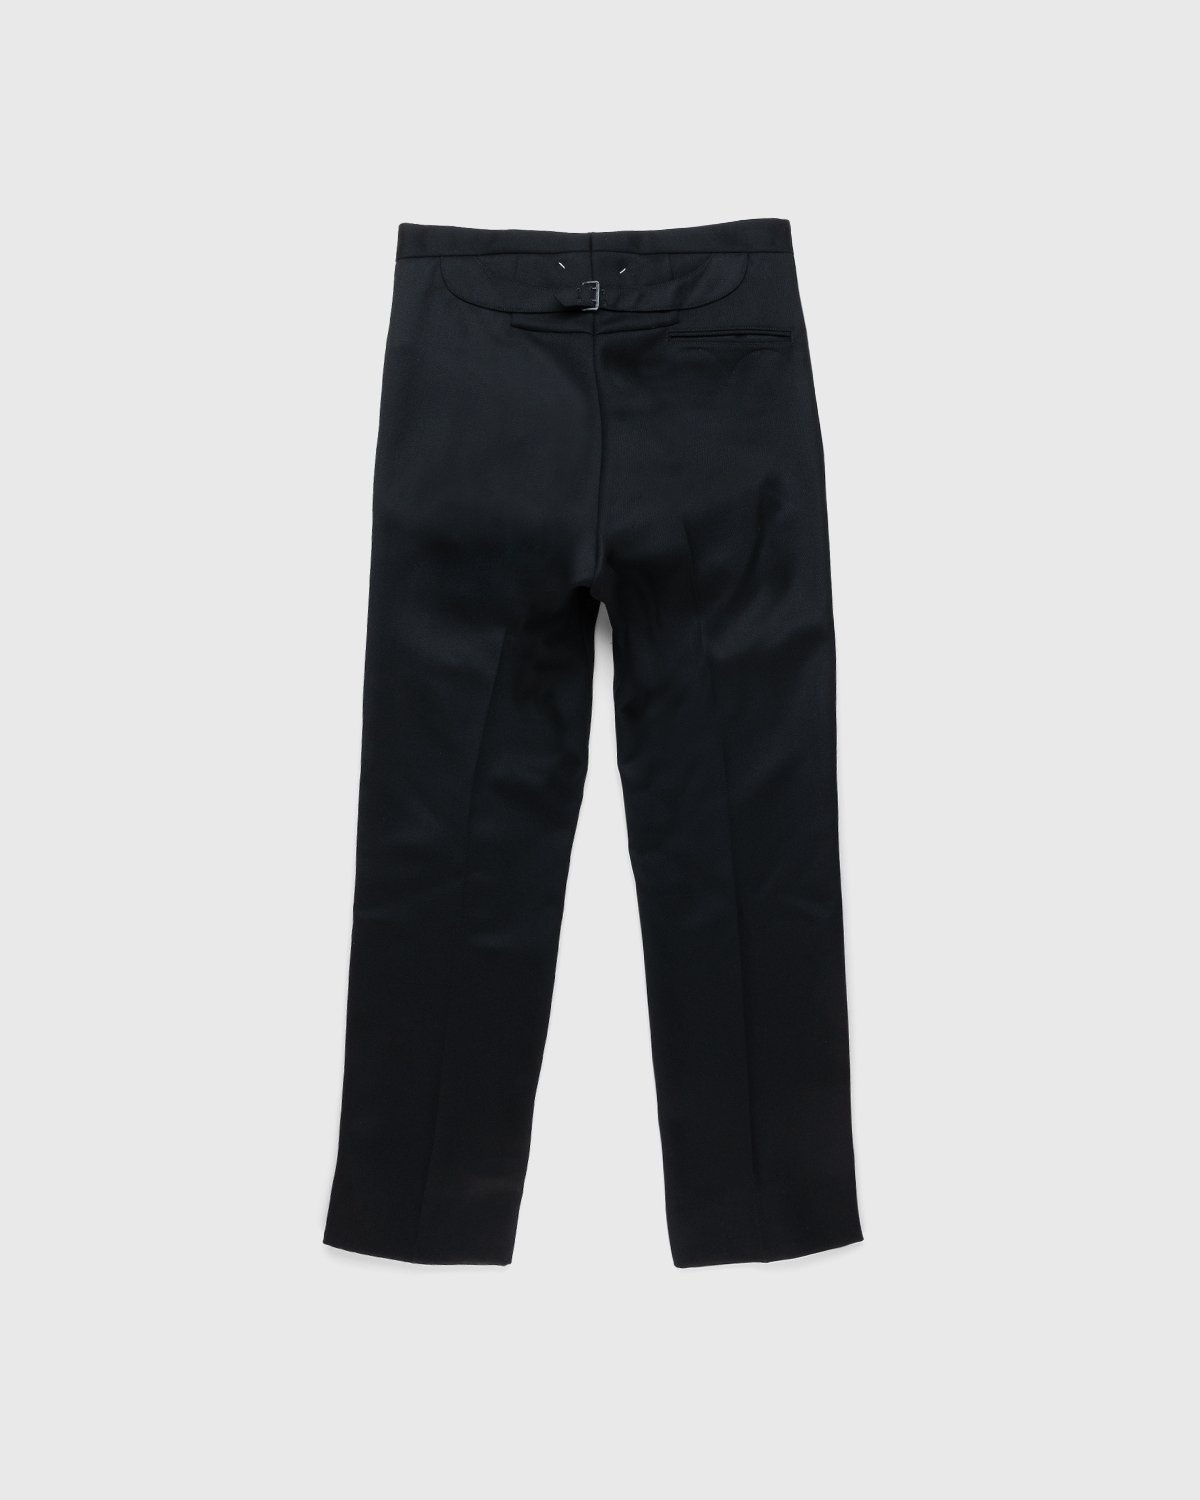 Maison Margiela – Gabardine Trousers Black - Trousers - Black - Image 2